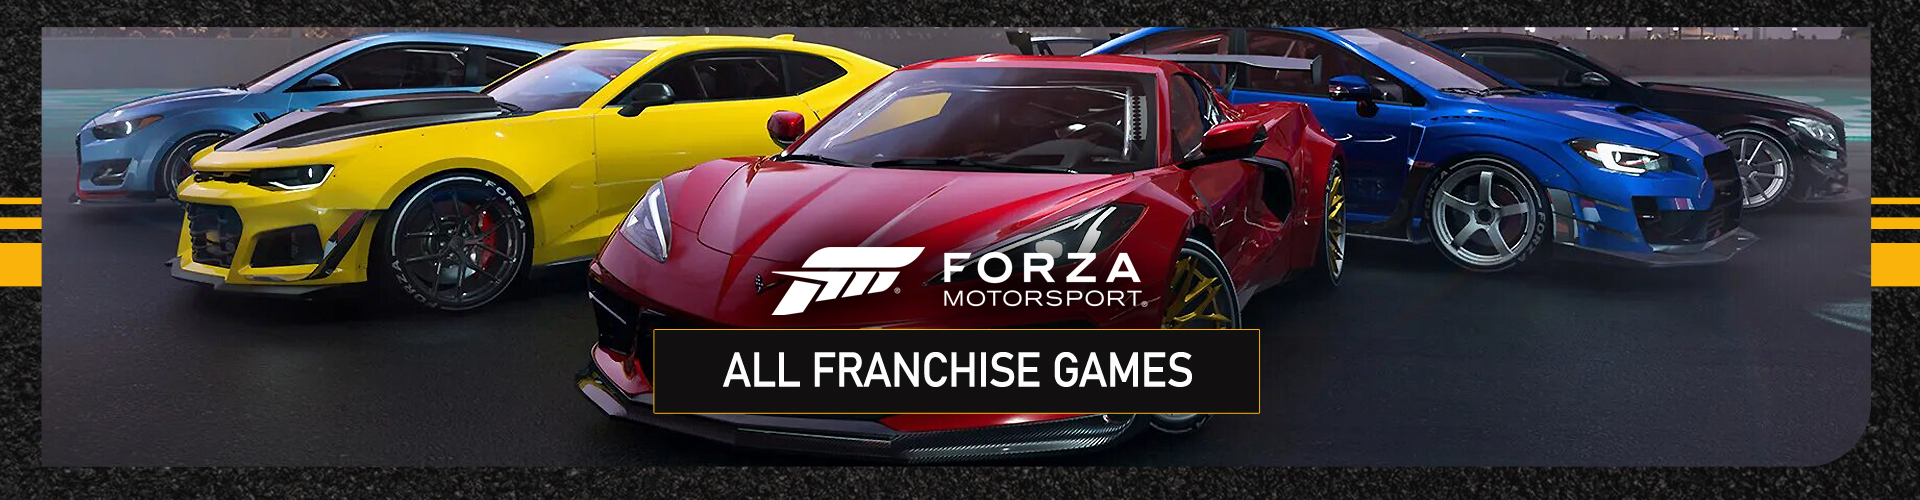 Forza Motorsport Franchise